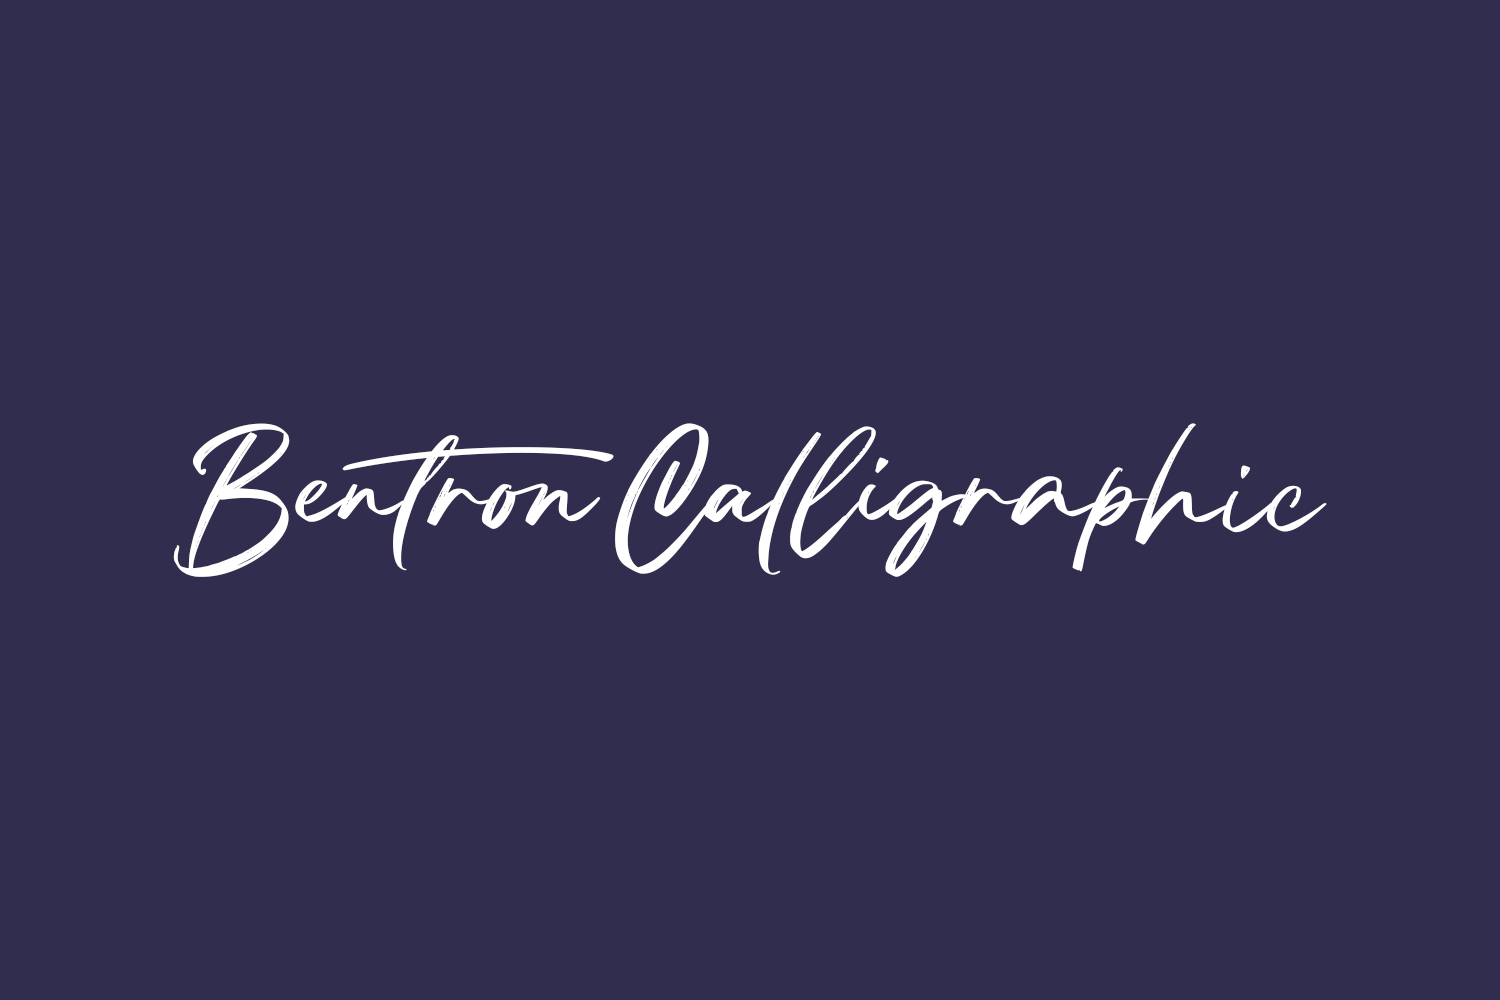 Bentron Calligraphic Free Font